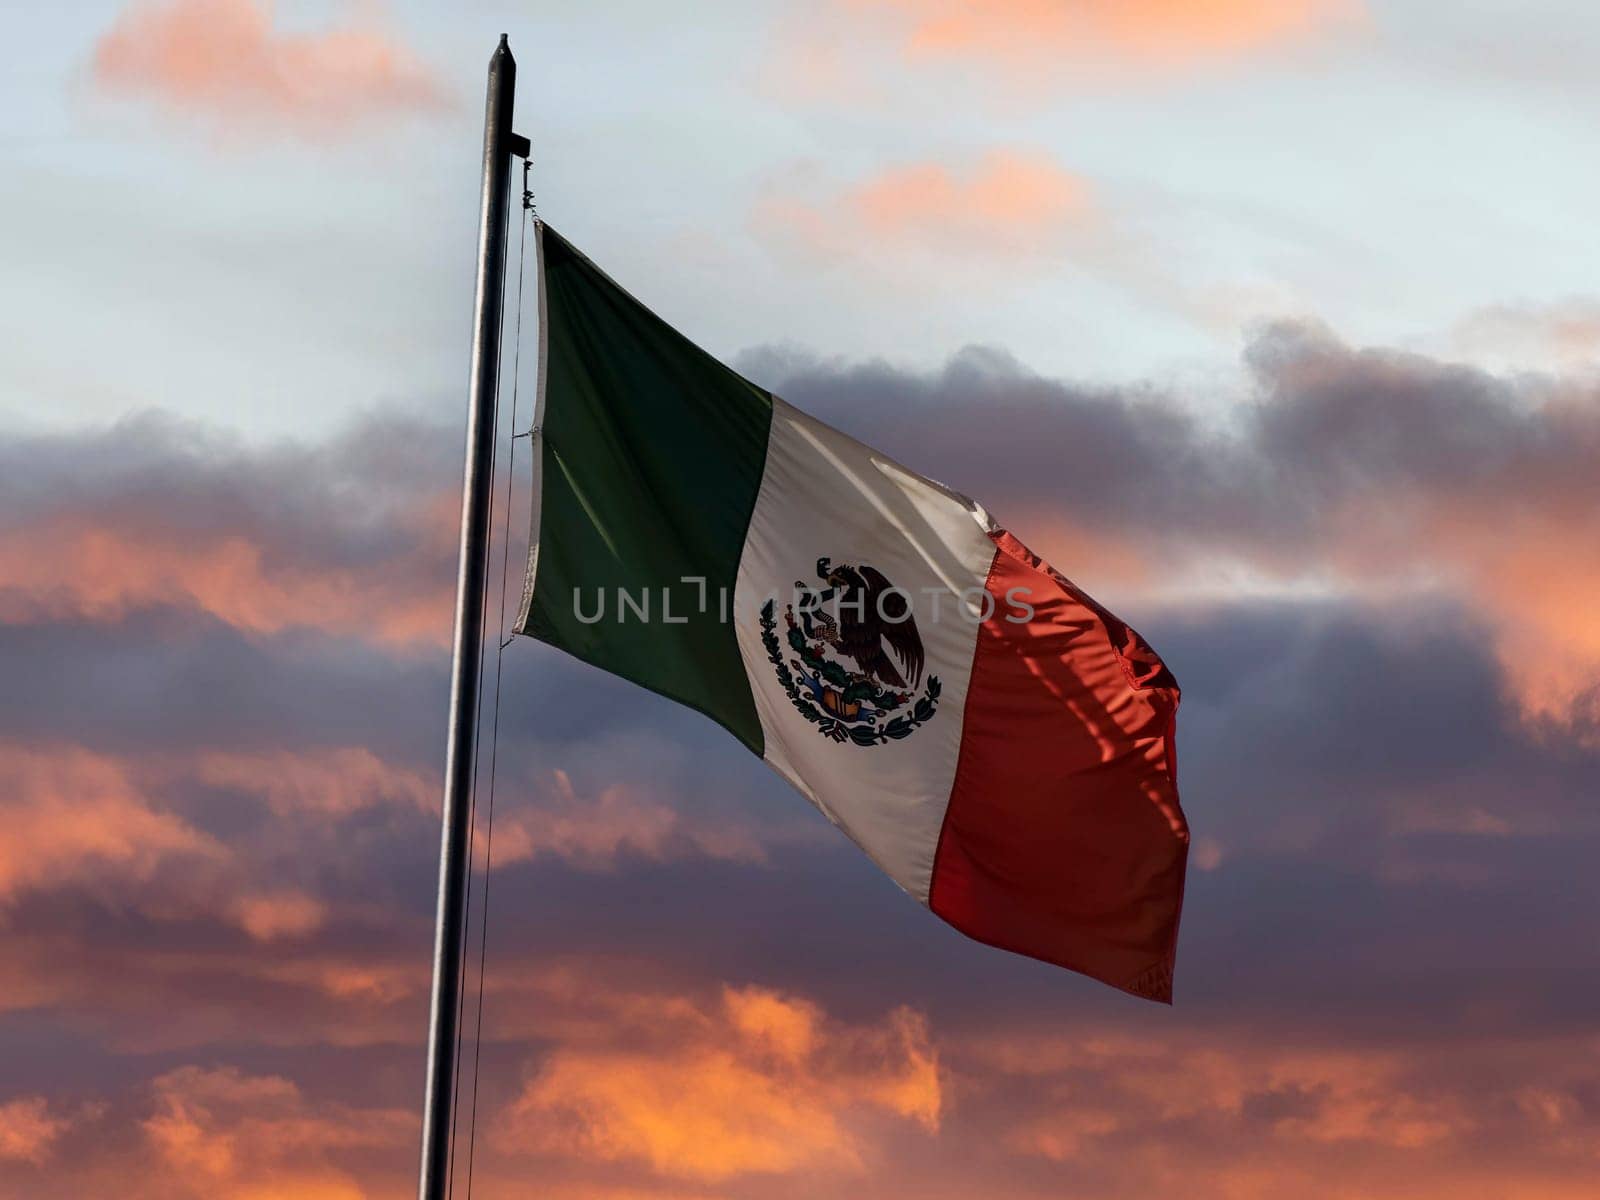 Sunset Mexican flag in ciudad de mexico, mexico city